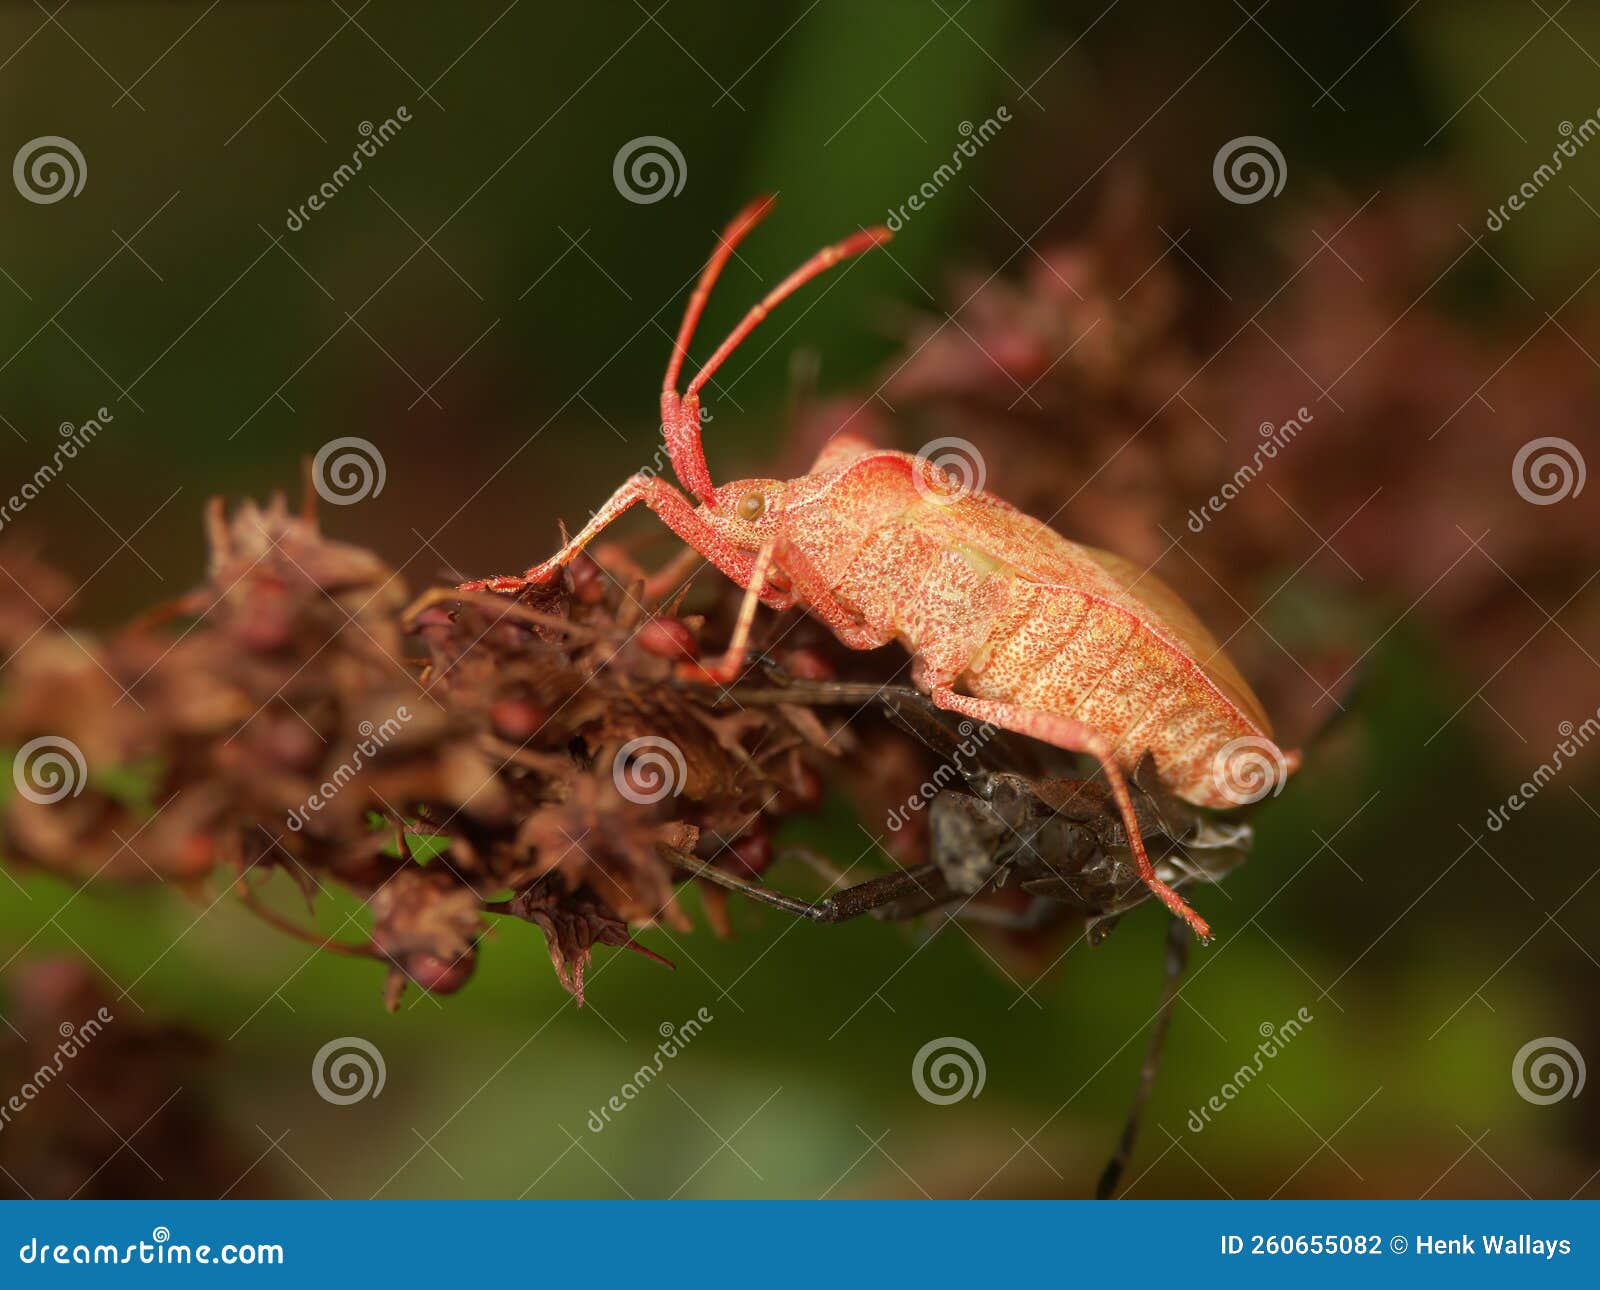 closeup on a fresh pale colored metamorphosed adult dock bug,coreus marginatus